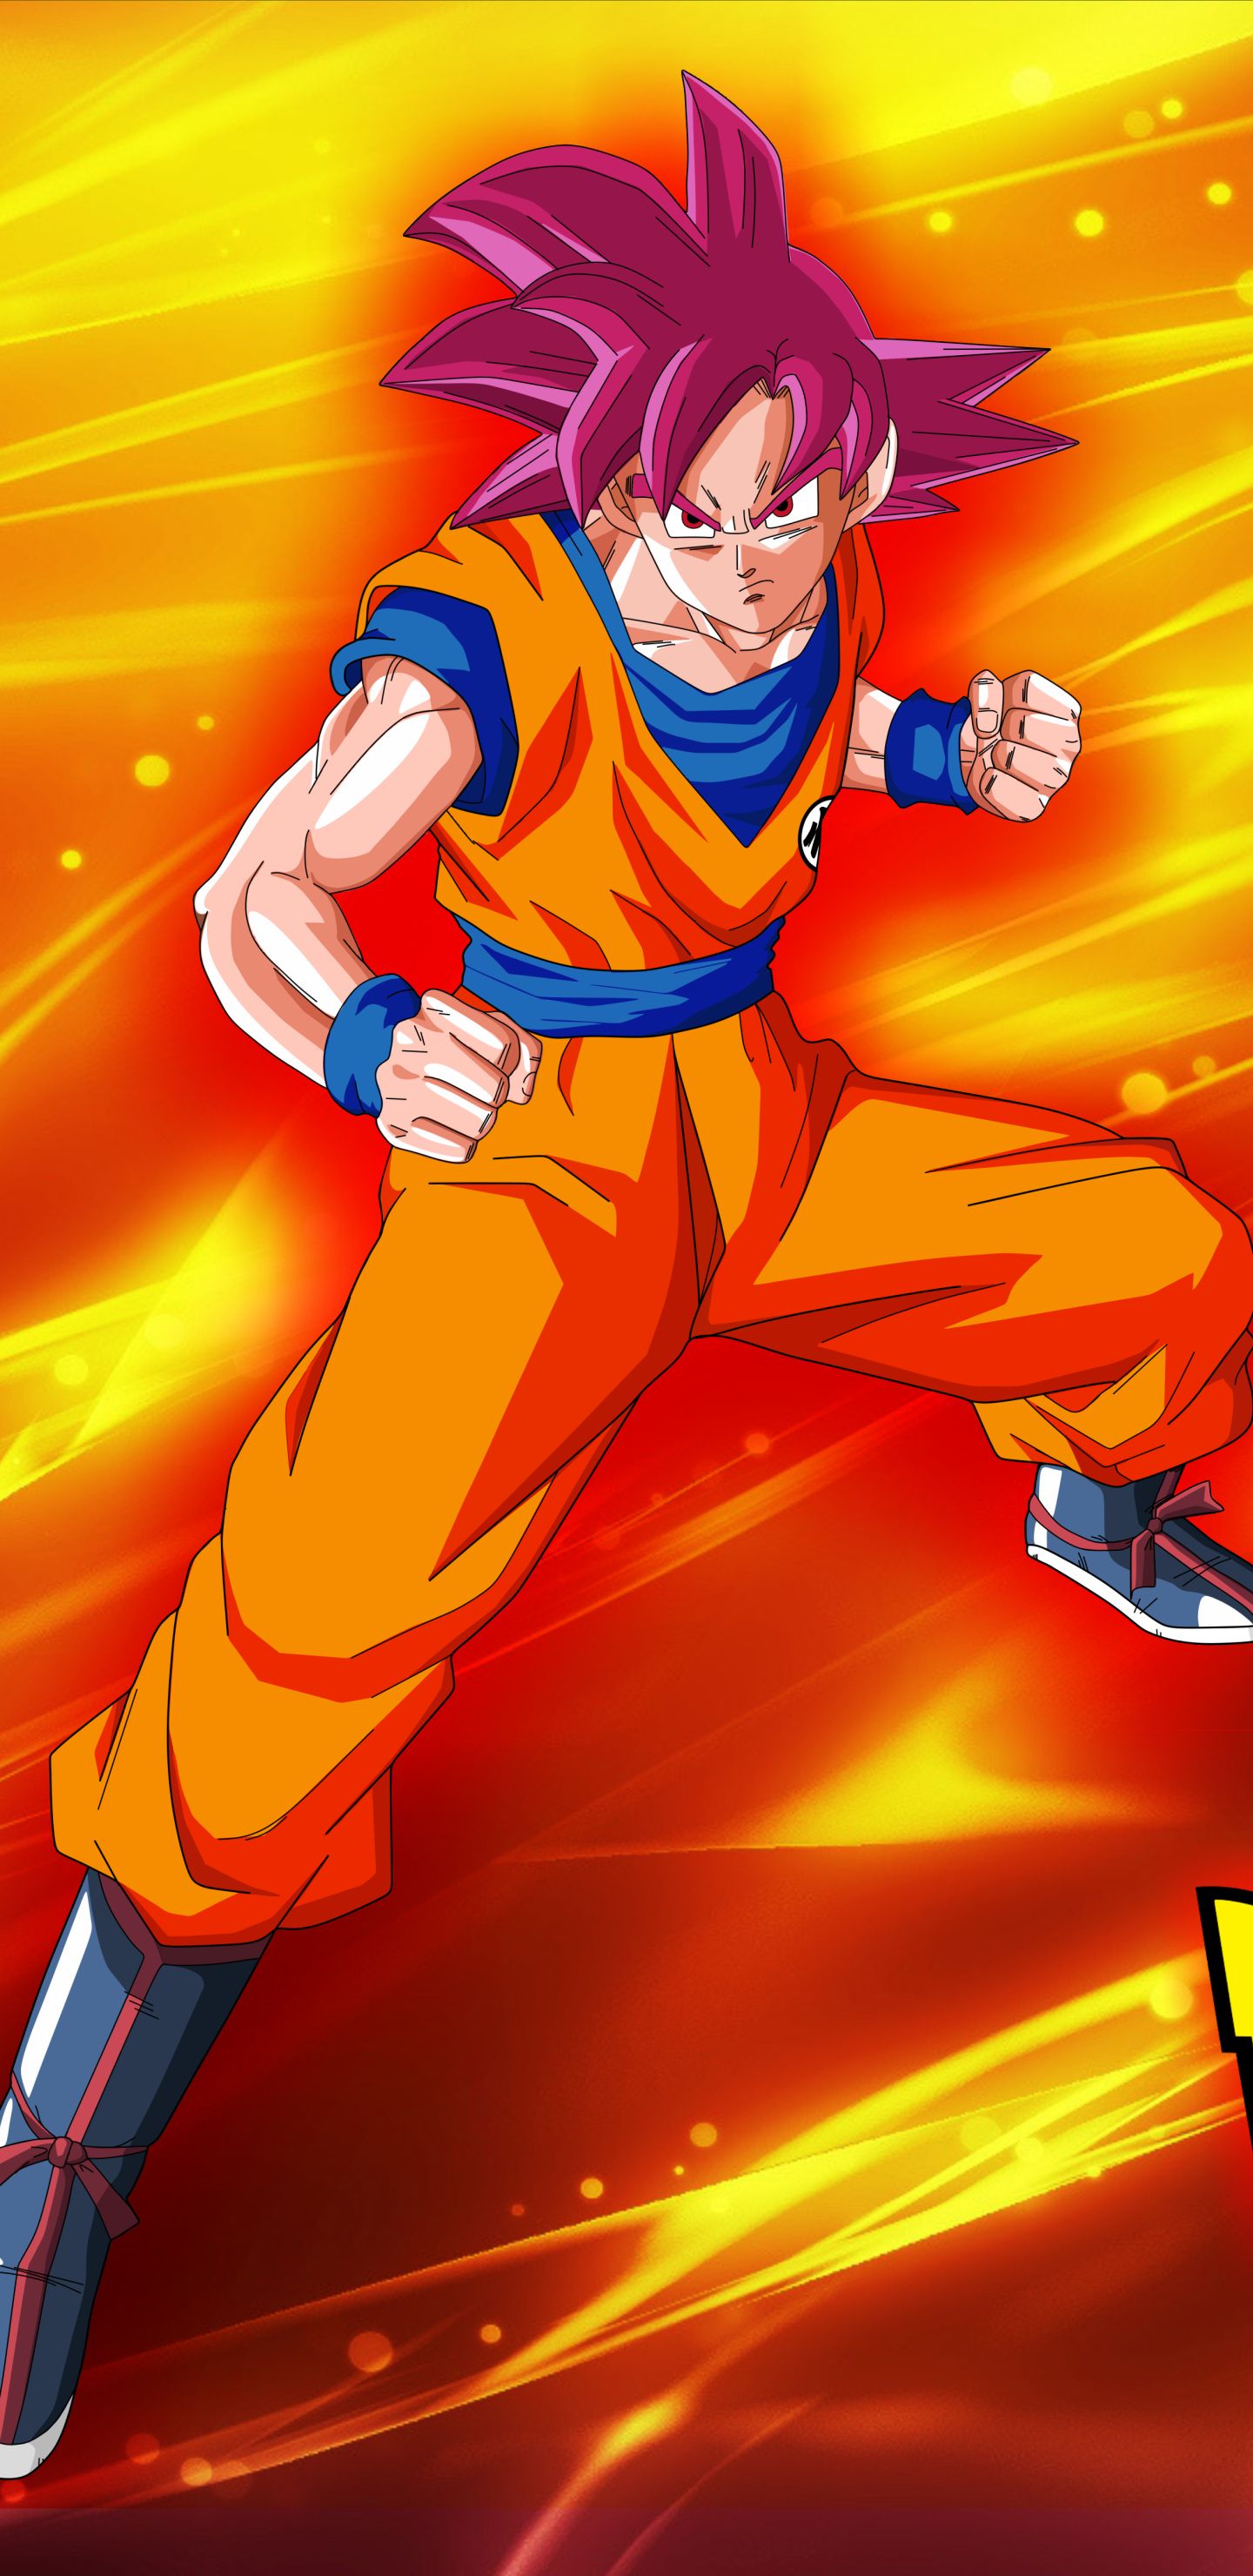 Vegeta SSJG Super Saiyan God from Dragon Ball Anime Wallpaper ID4991